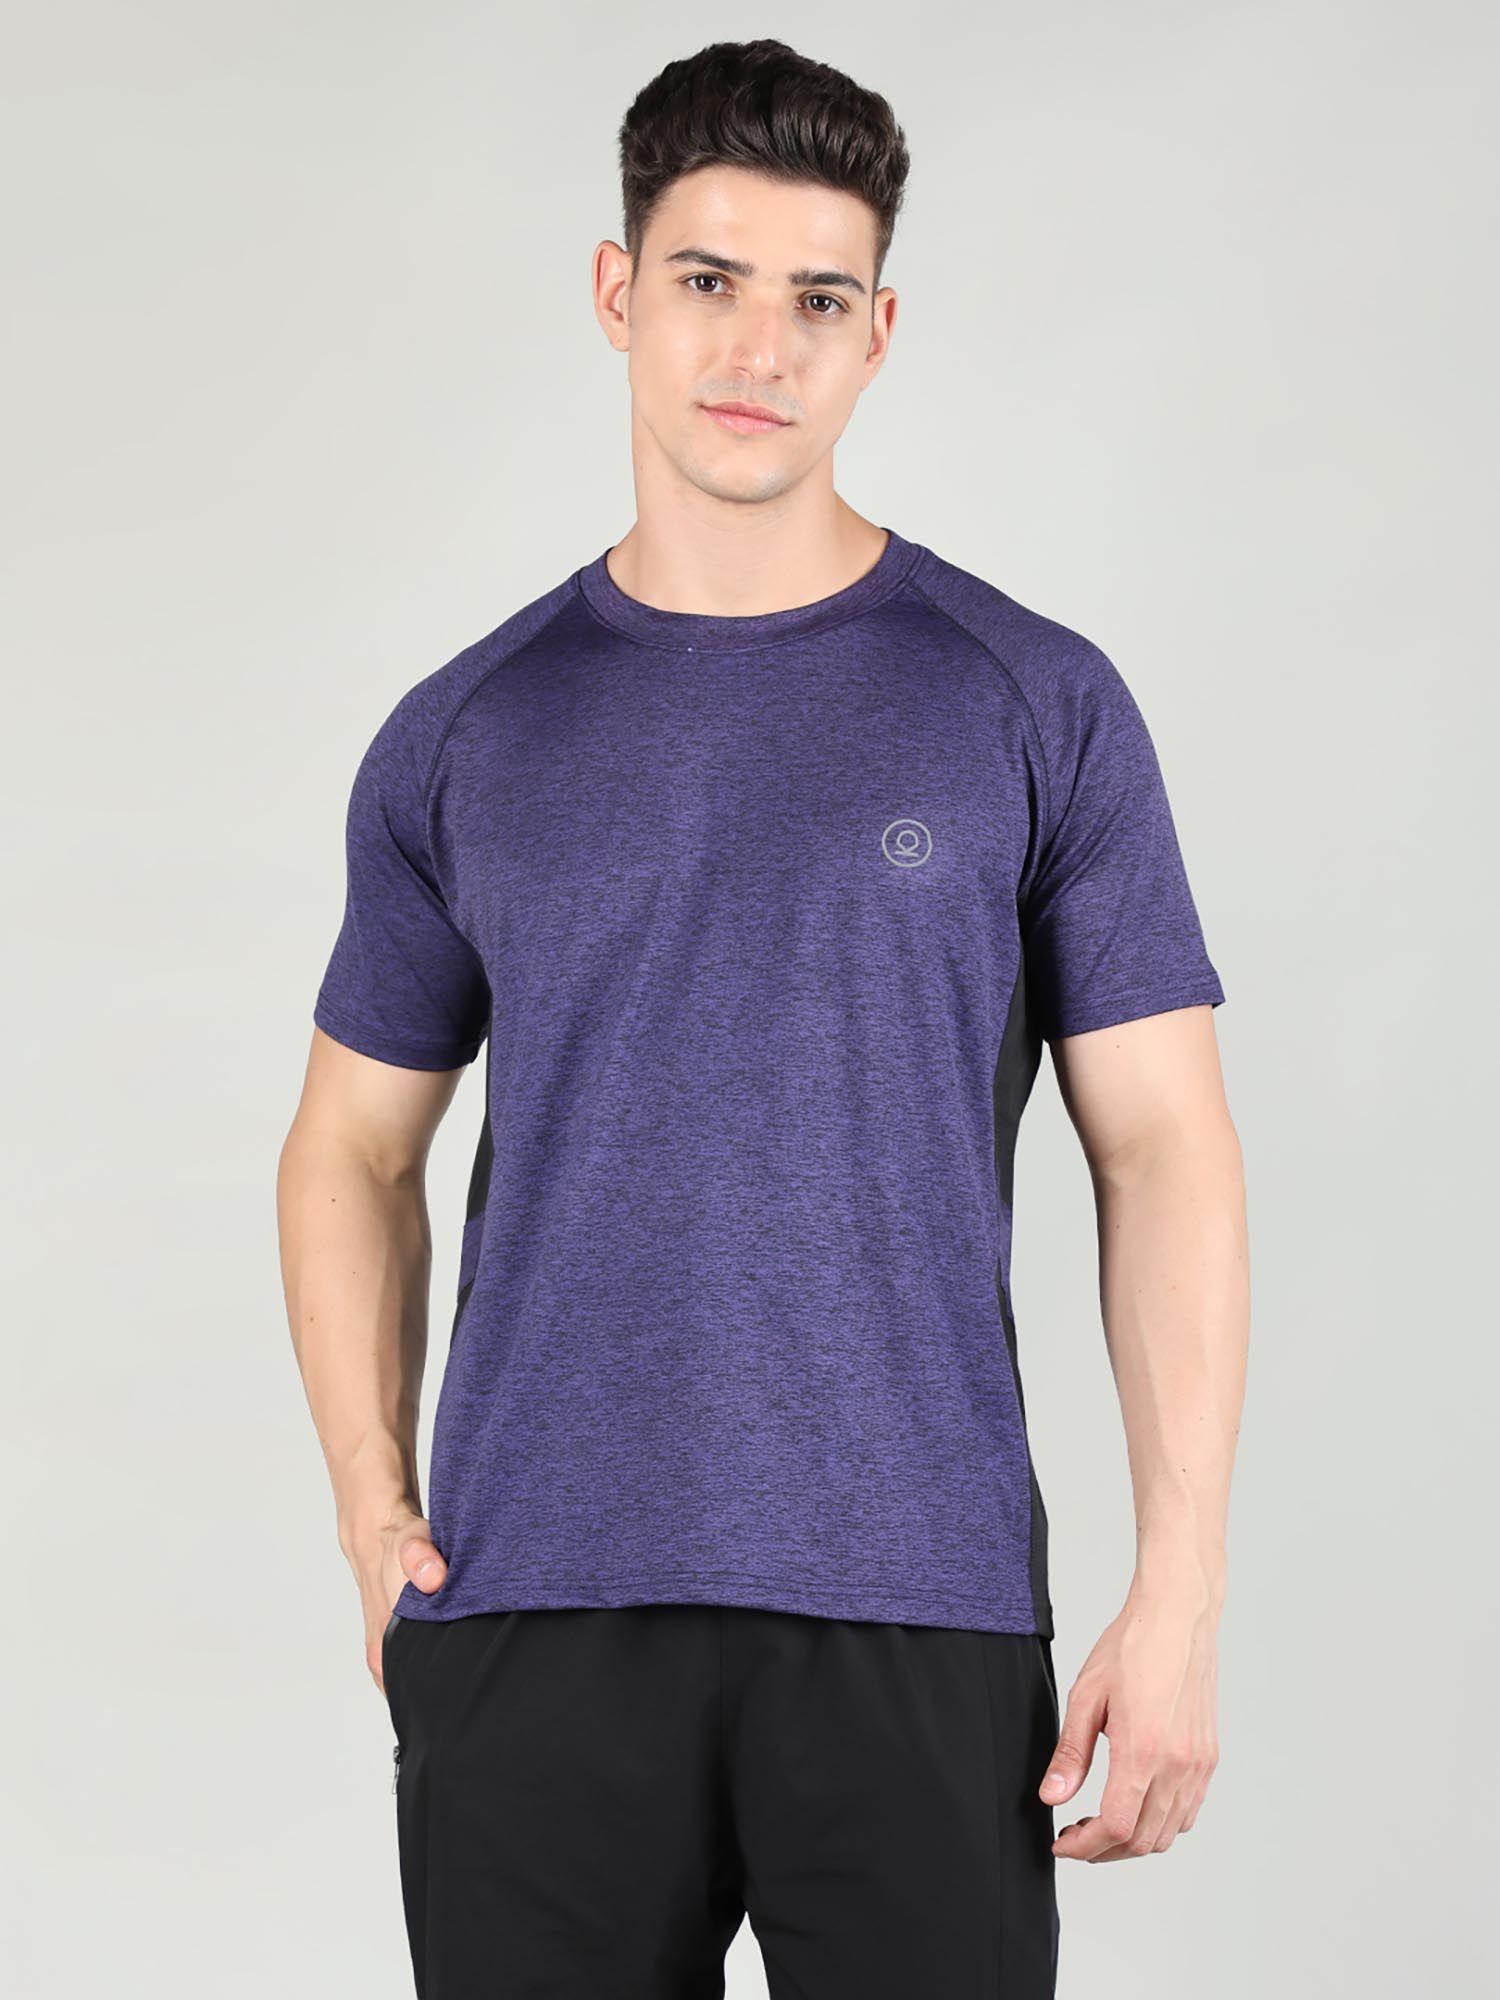 mens round neck purple sports t shirt